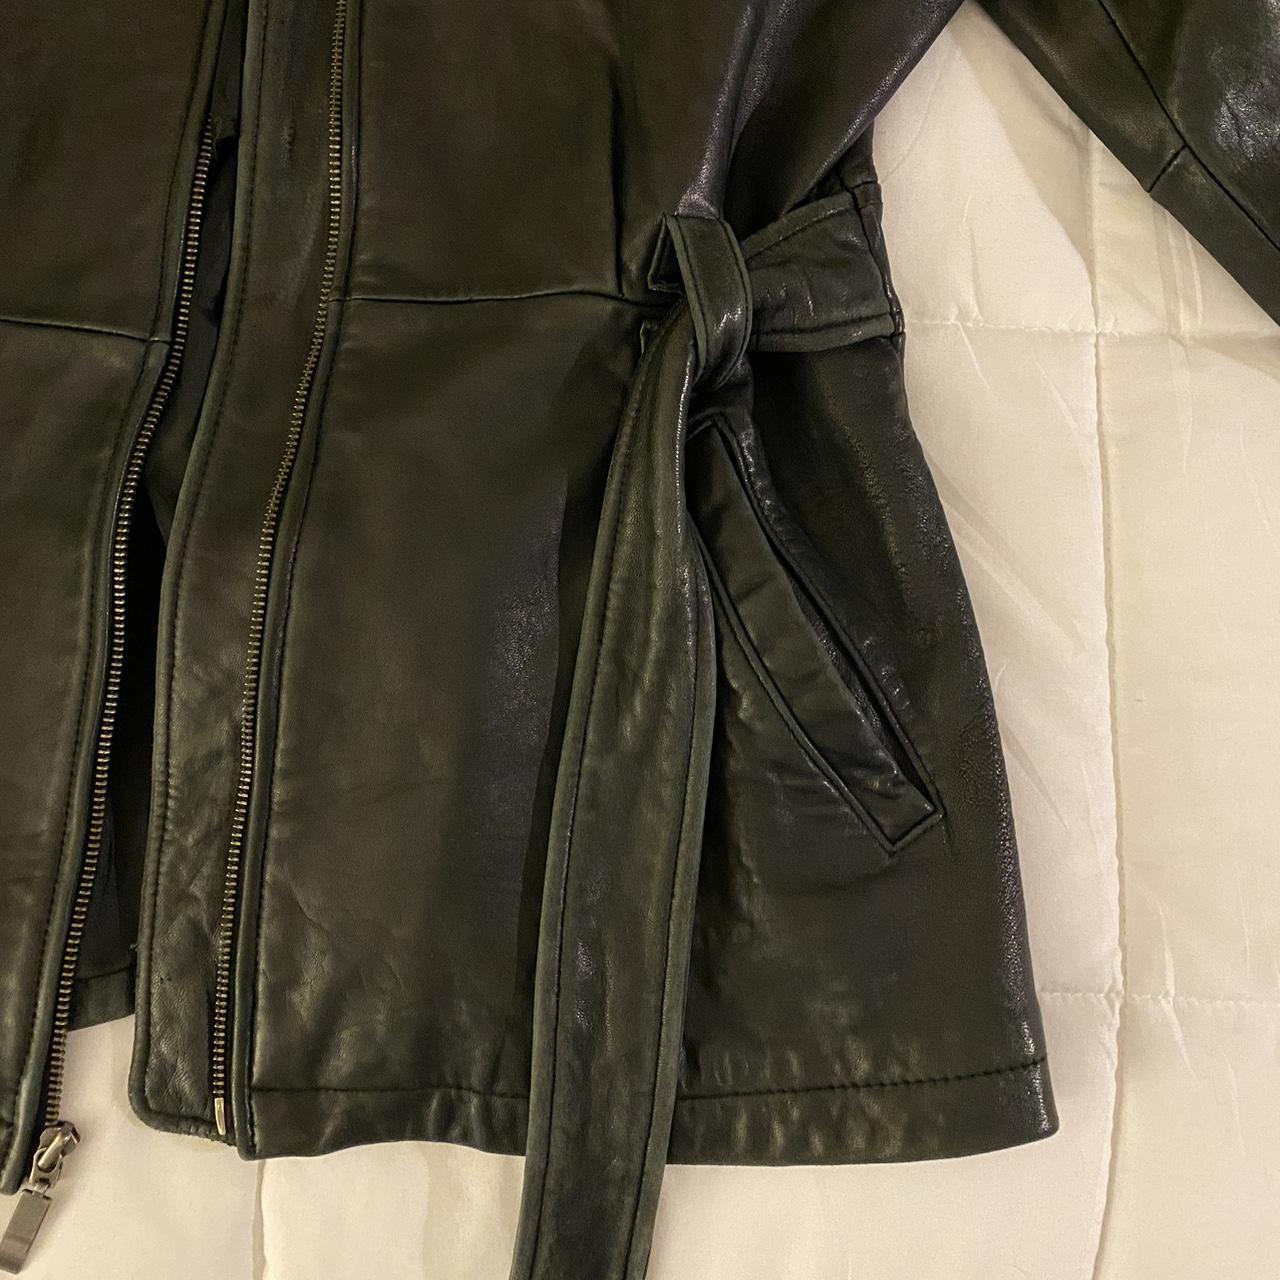 Wilson’s Leather Women's Black Jacket (2)